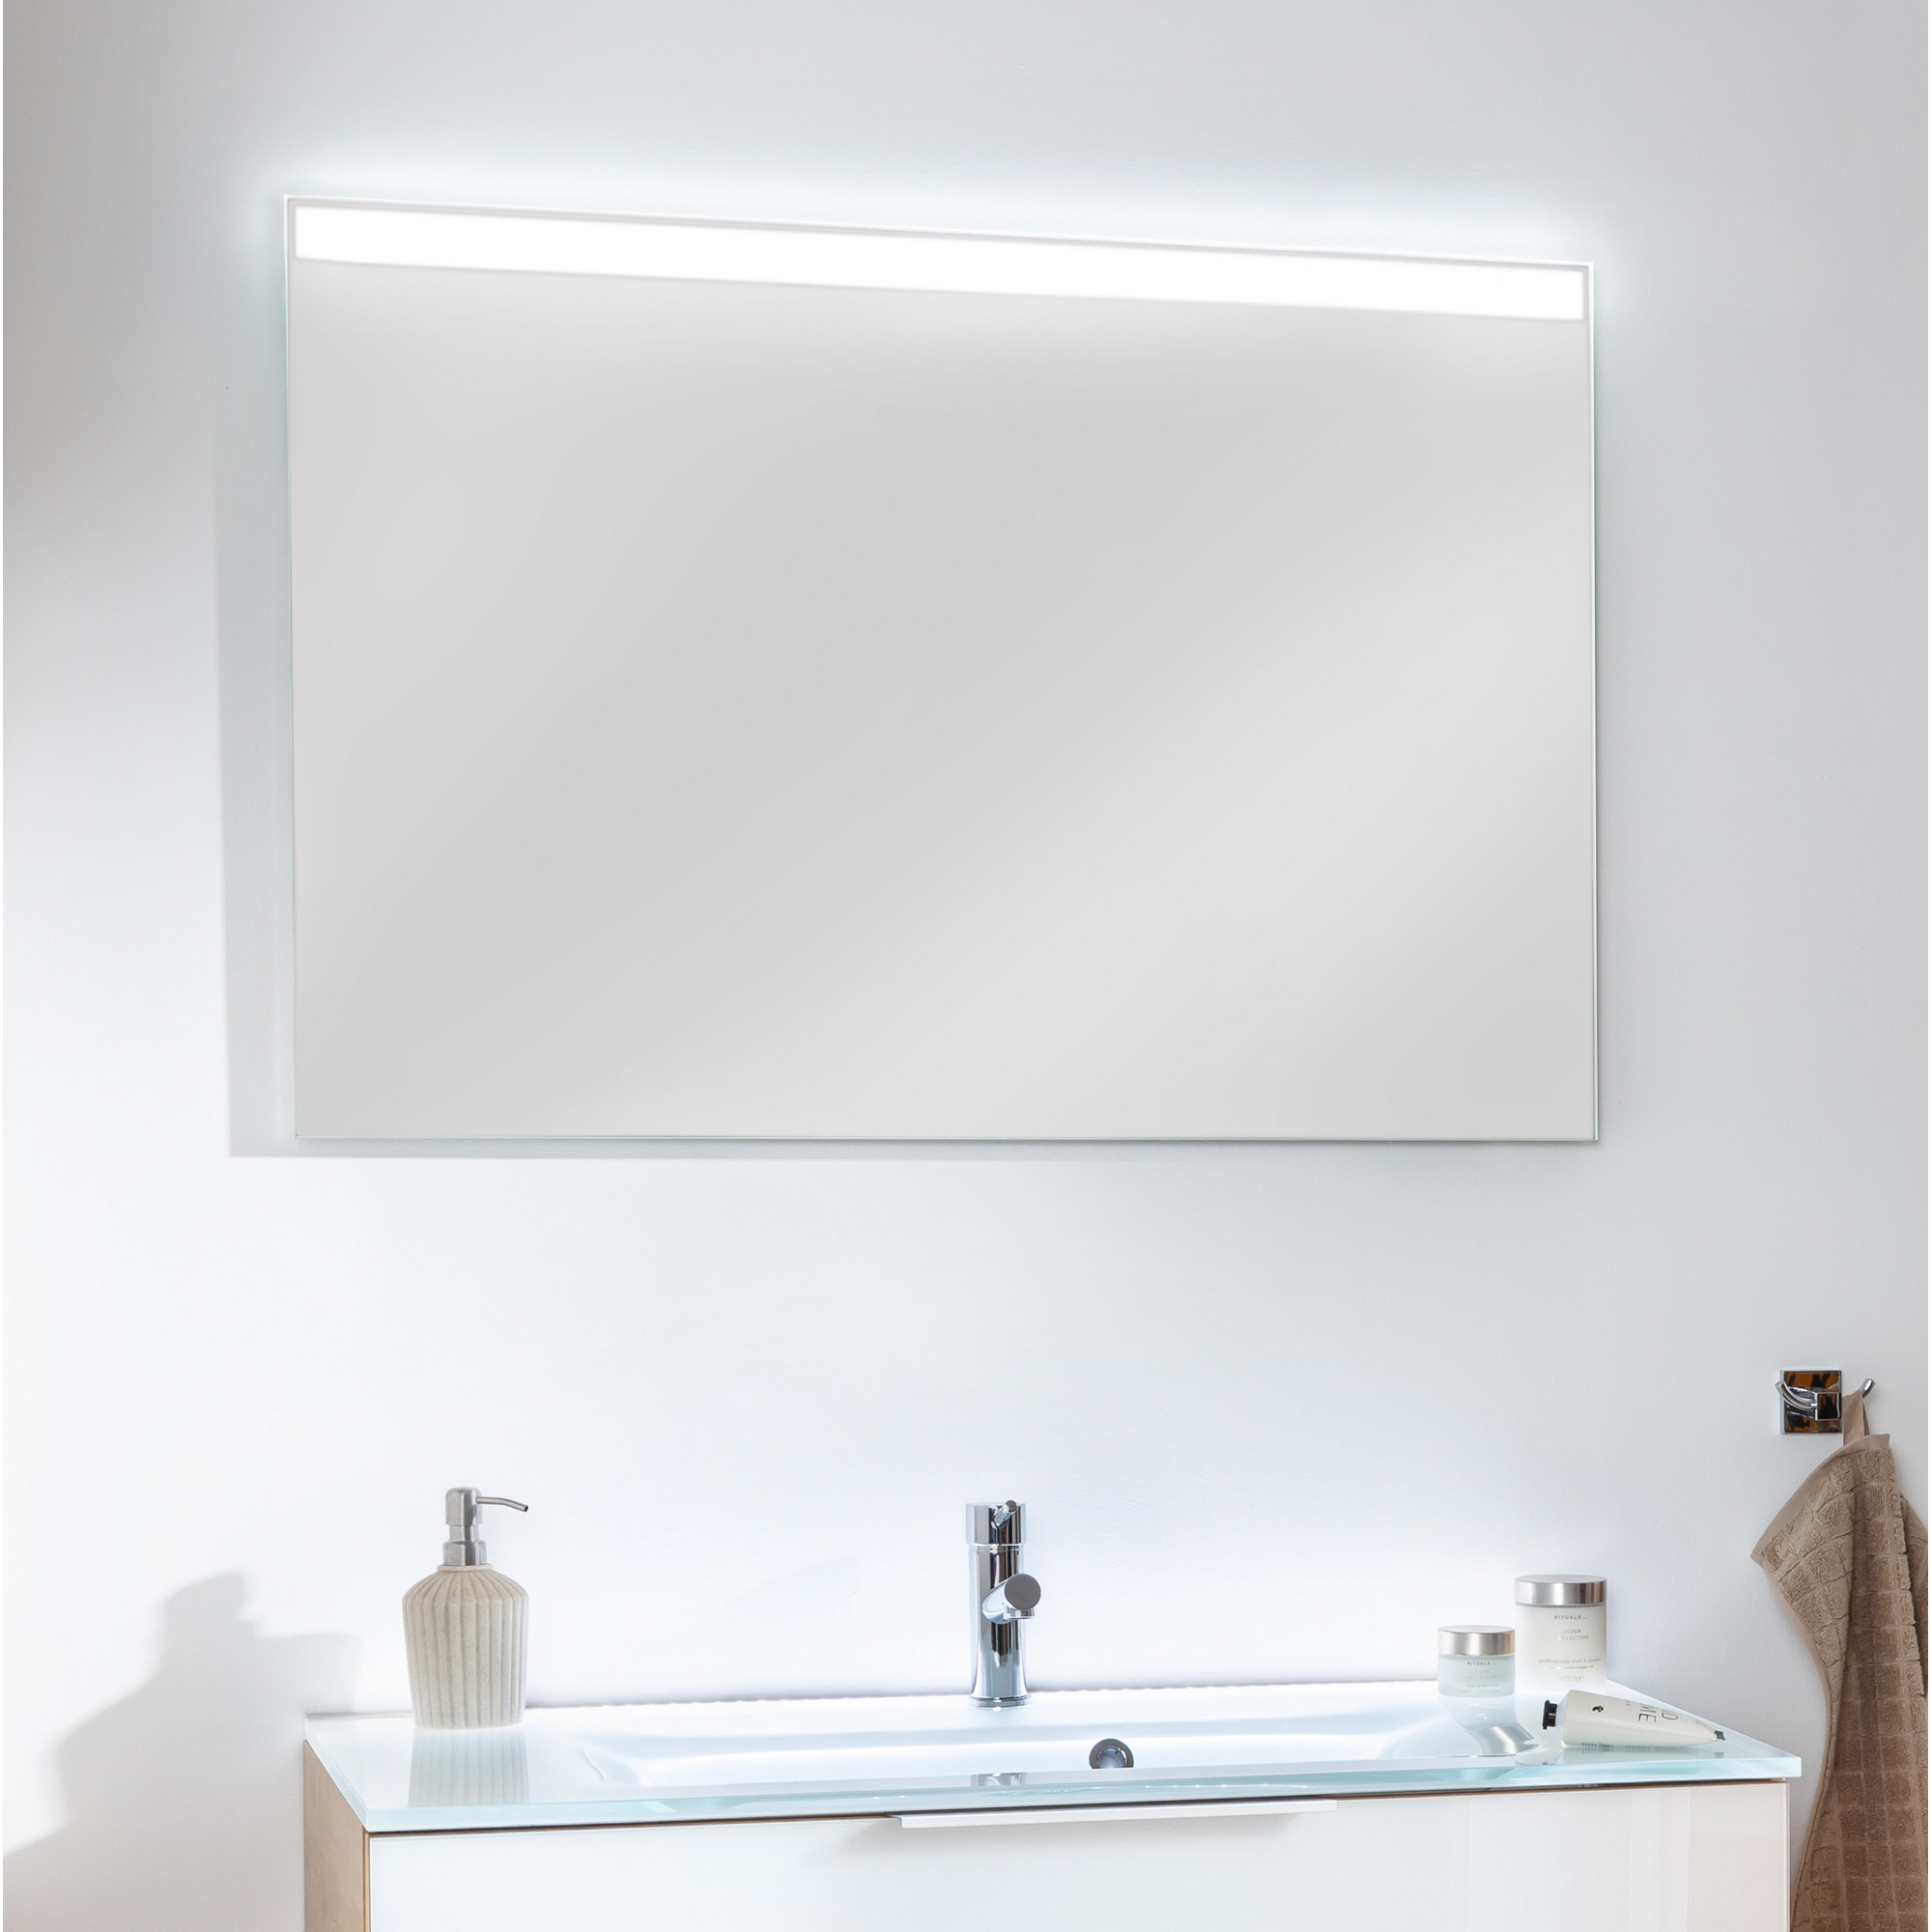 LED-Spiegelelement 'Brillant Light' aluminiumfarben 100 x 68 x 2,4 cm + product picture